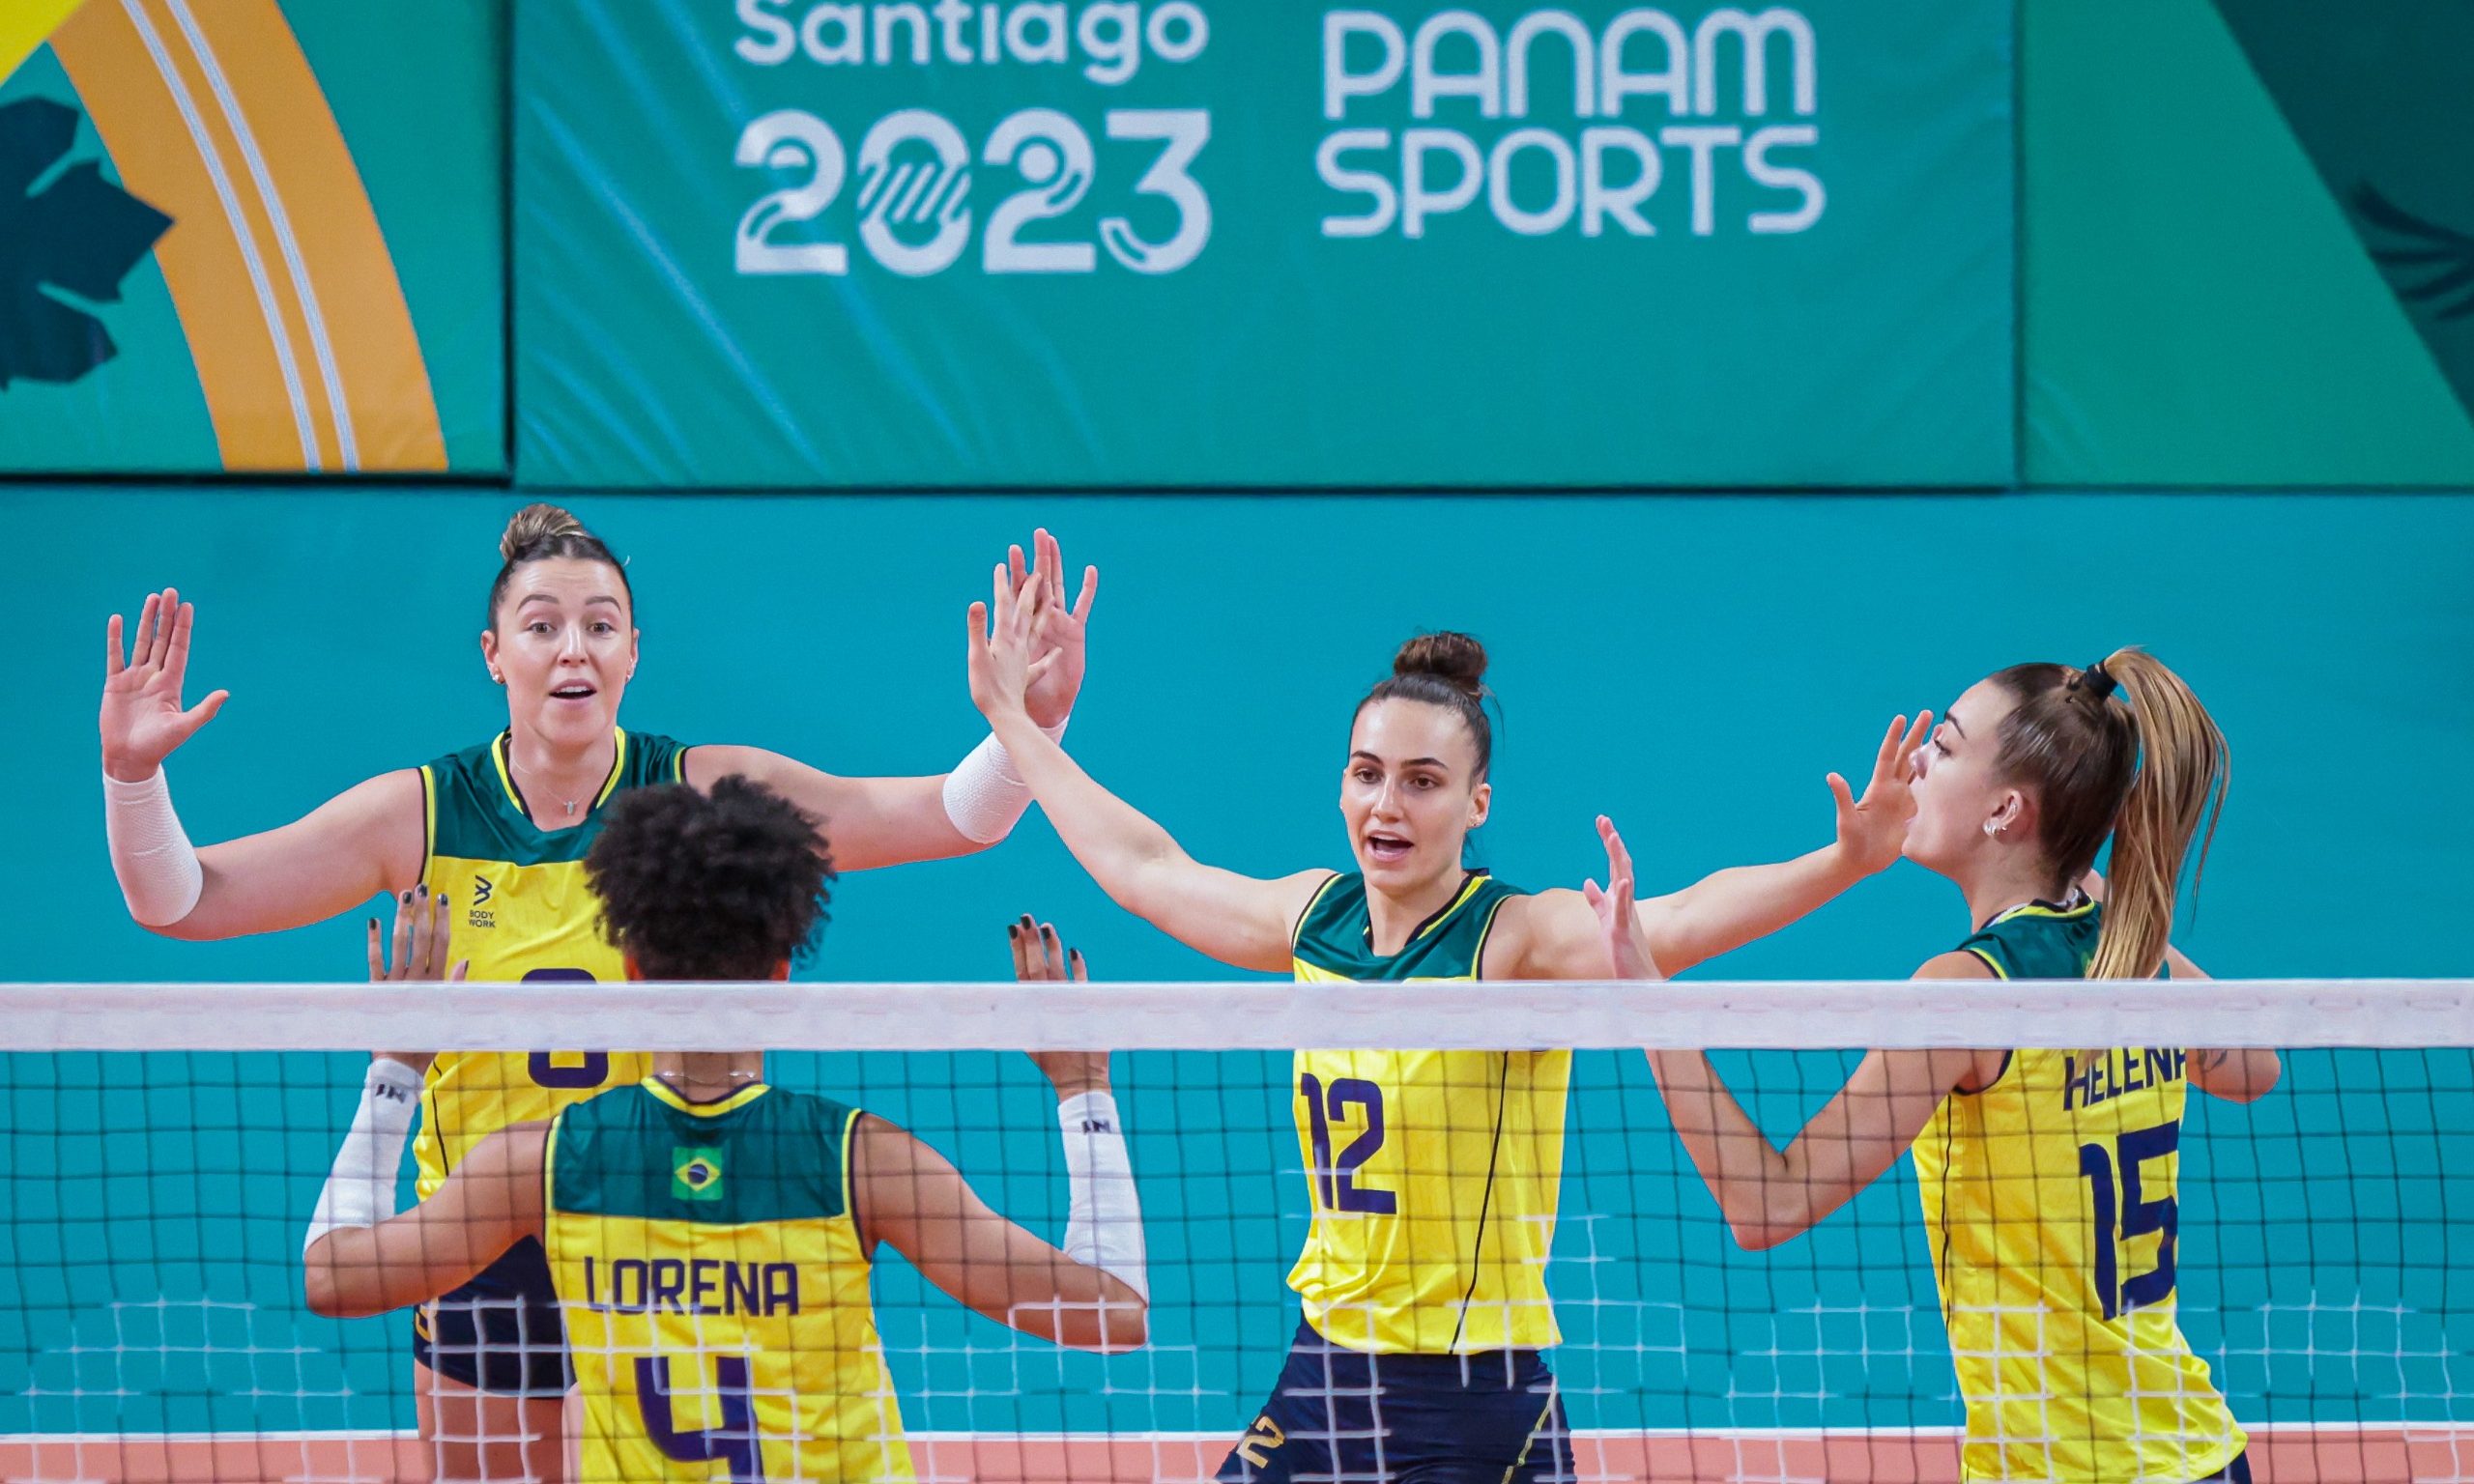 Brasil comemora desempenho no Pan de Santiago – Web Vôlei